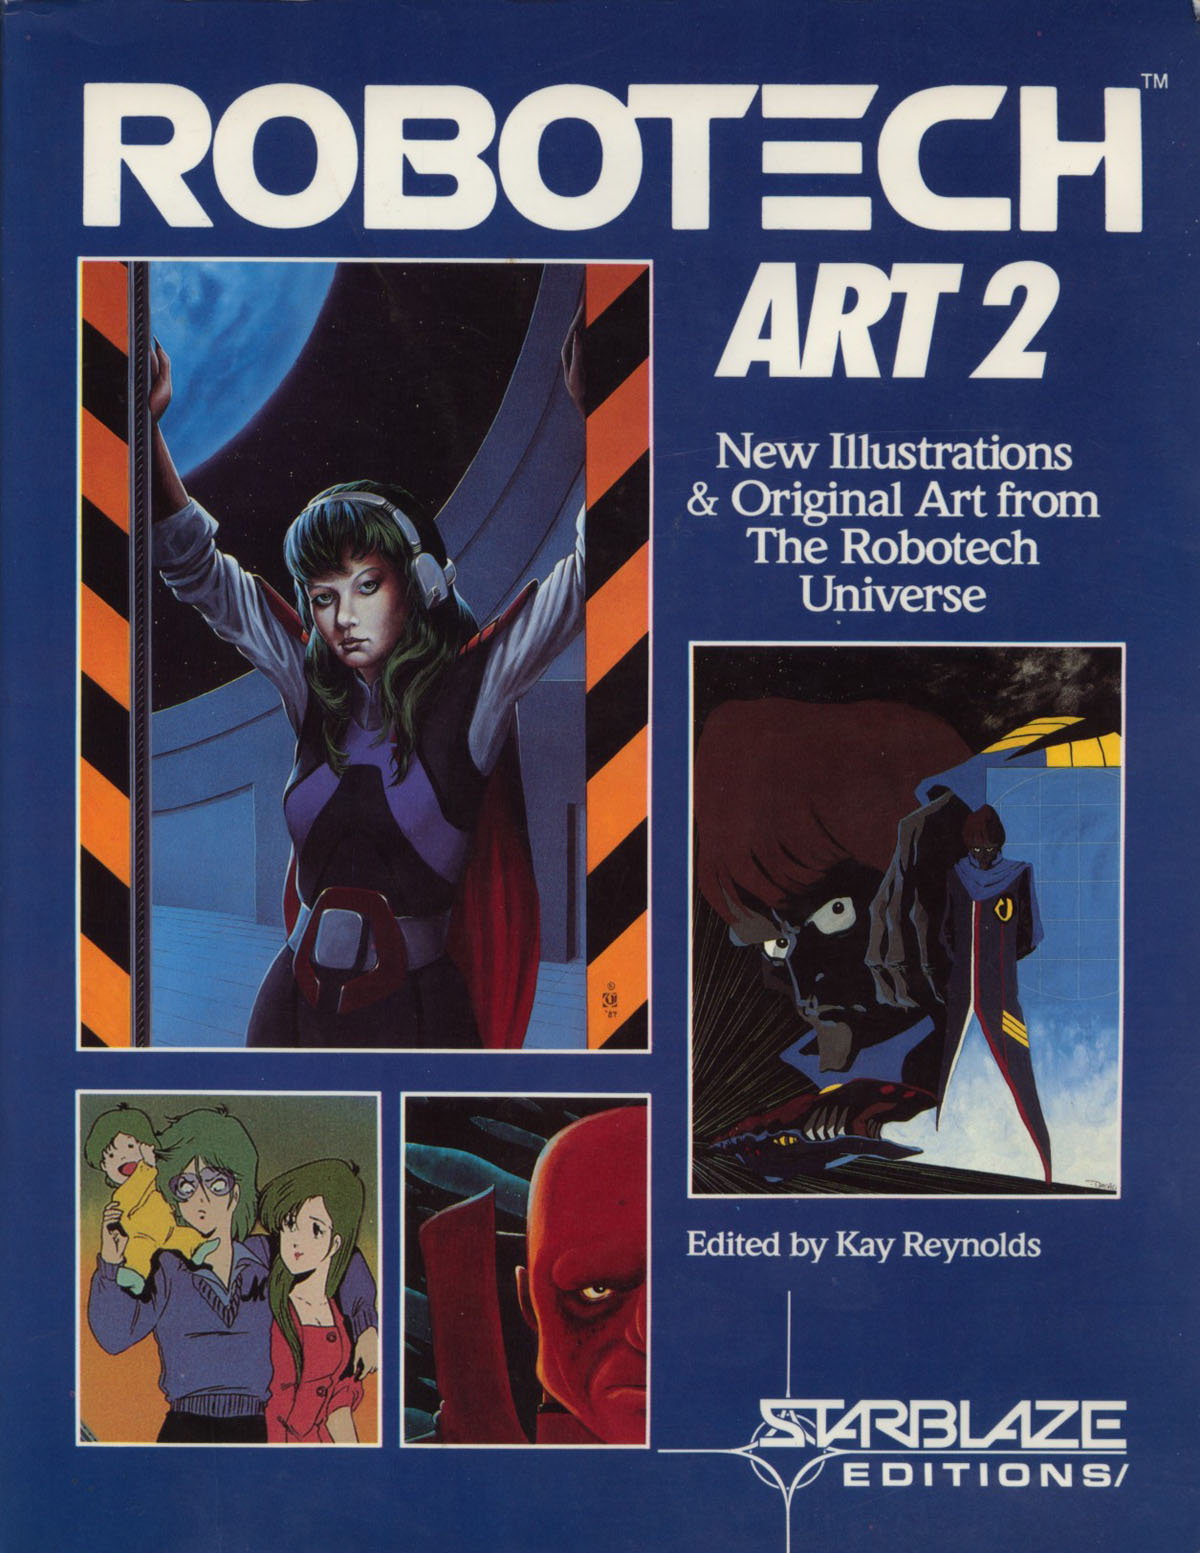 Robotech Art 2 New Illustrations and Original Art from The Robotech Universe000